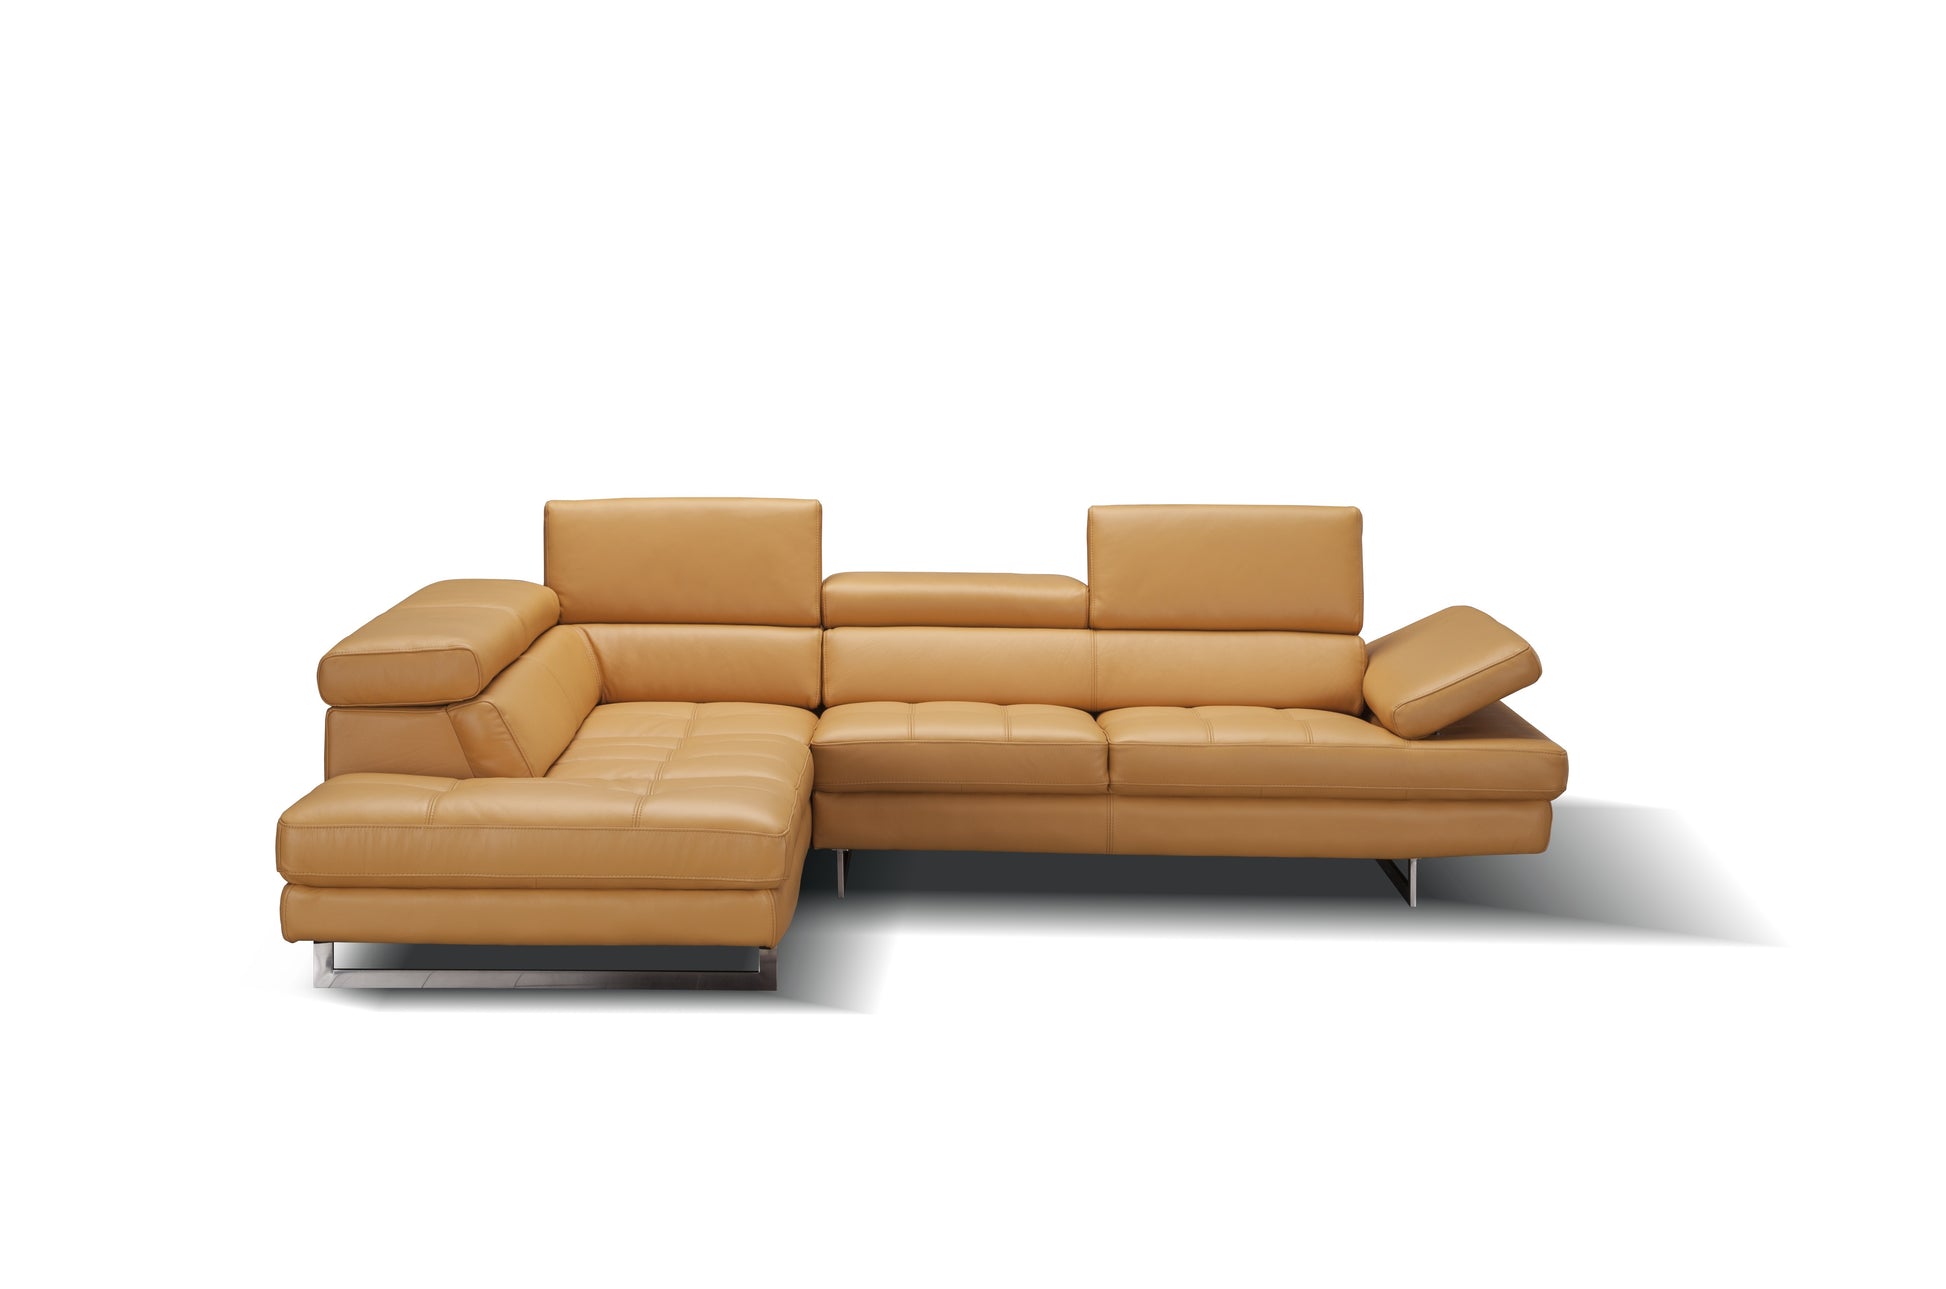 A761 Italian Leather Sectional Sofa Freesia LHF by JM